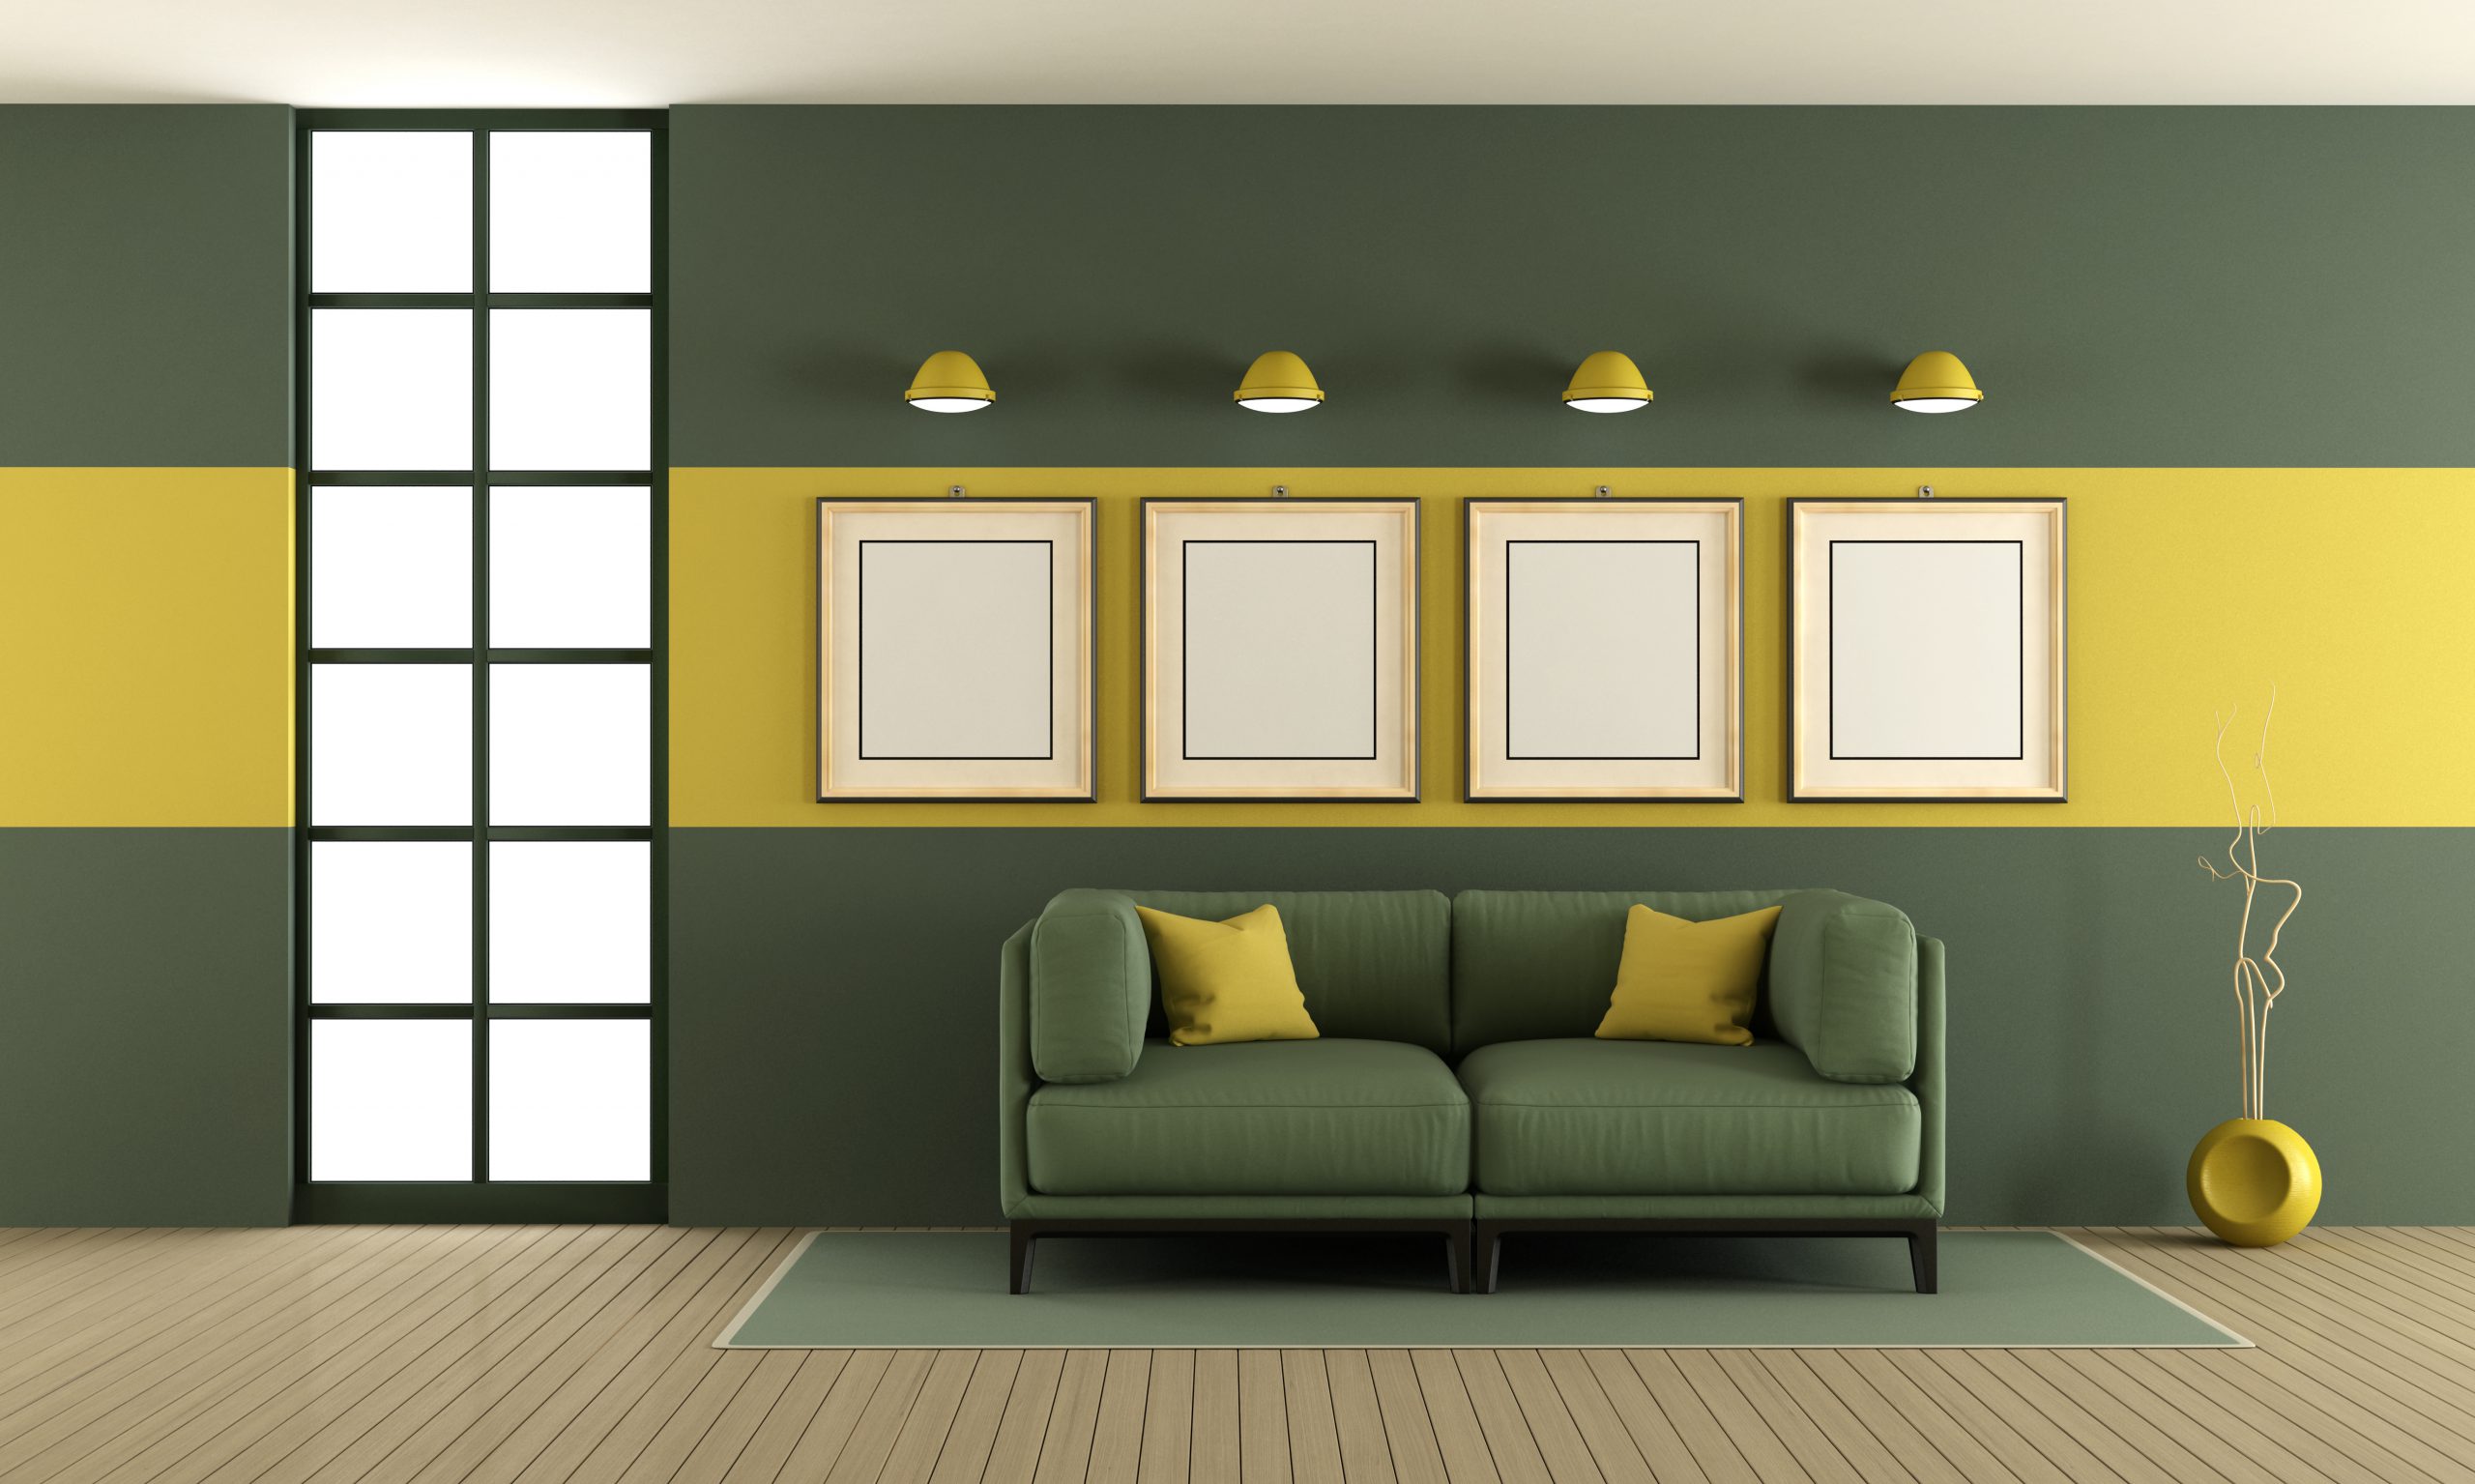 Green And Yellow Living Room 2021 08 26 15 32 54 Utc